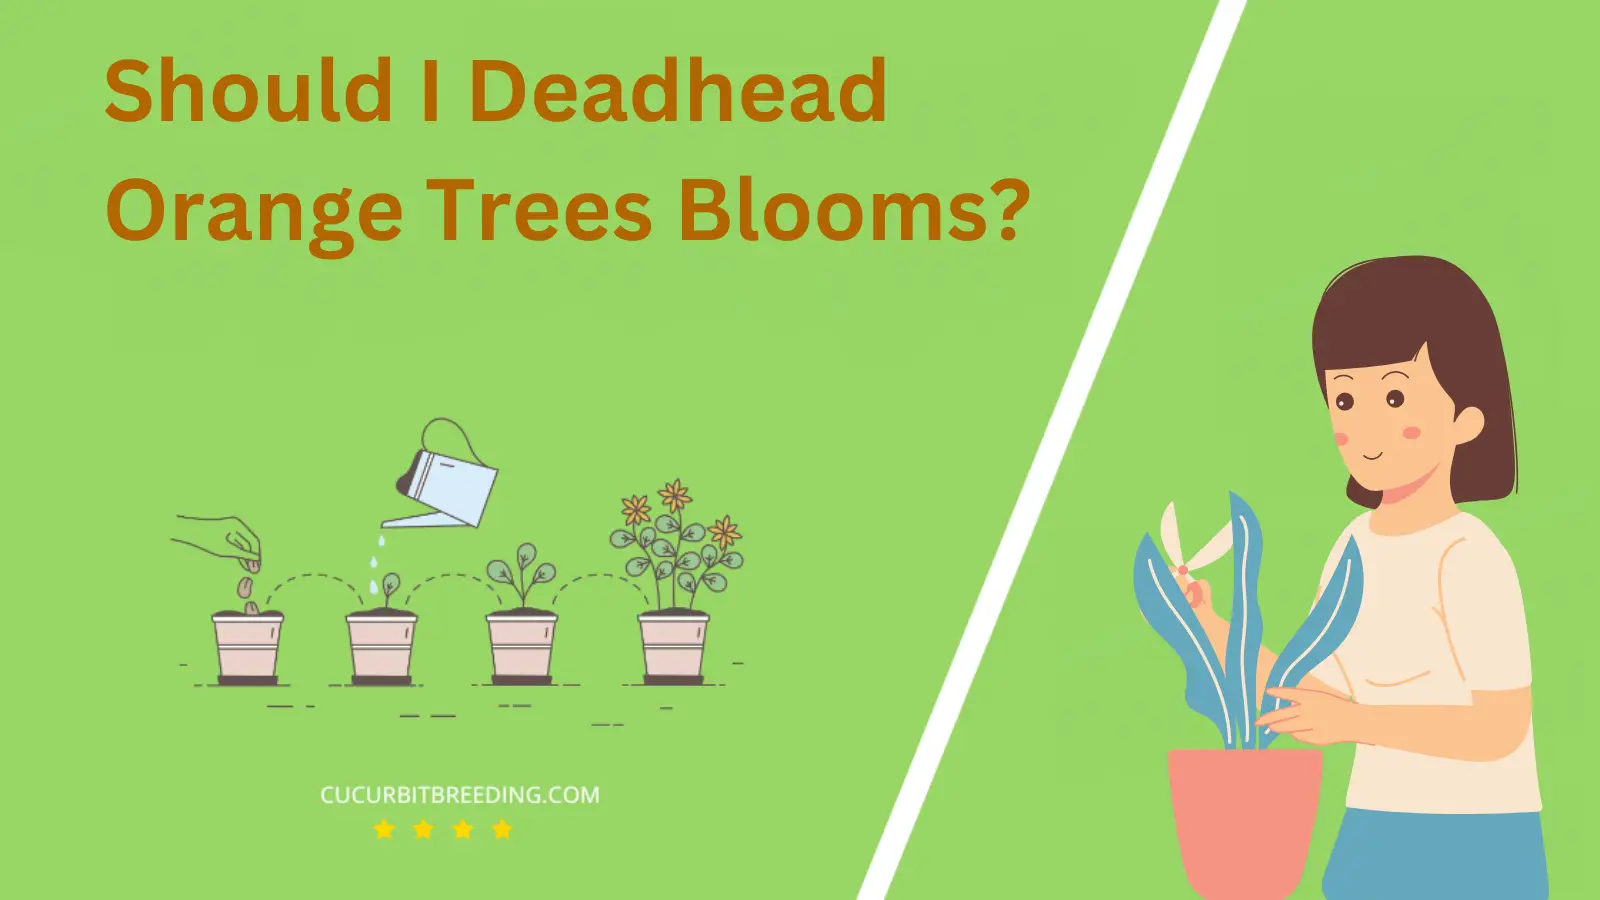 Should I Deadhead Orange Trees Blooms?